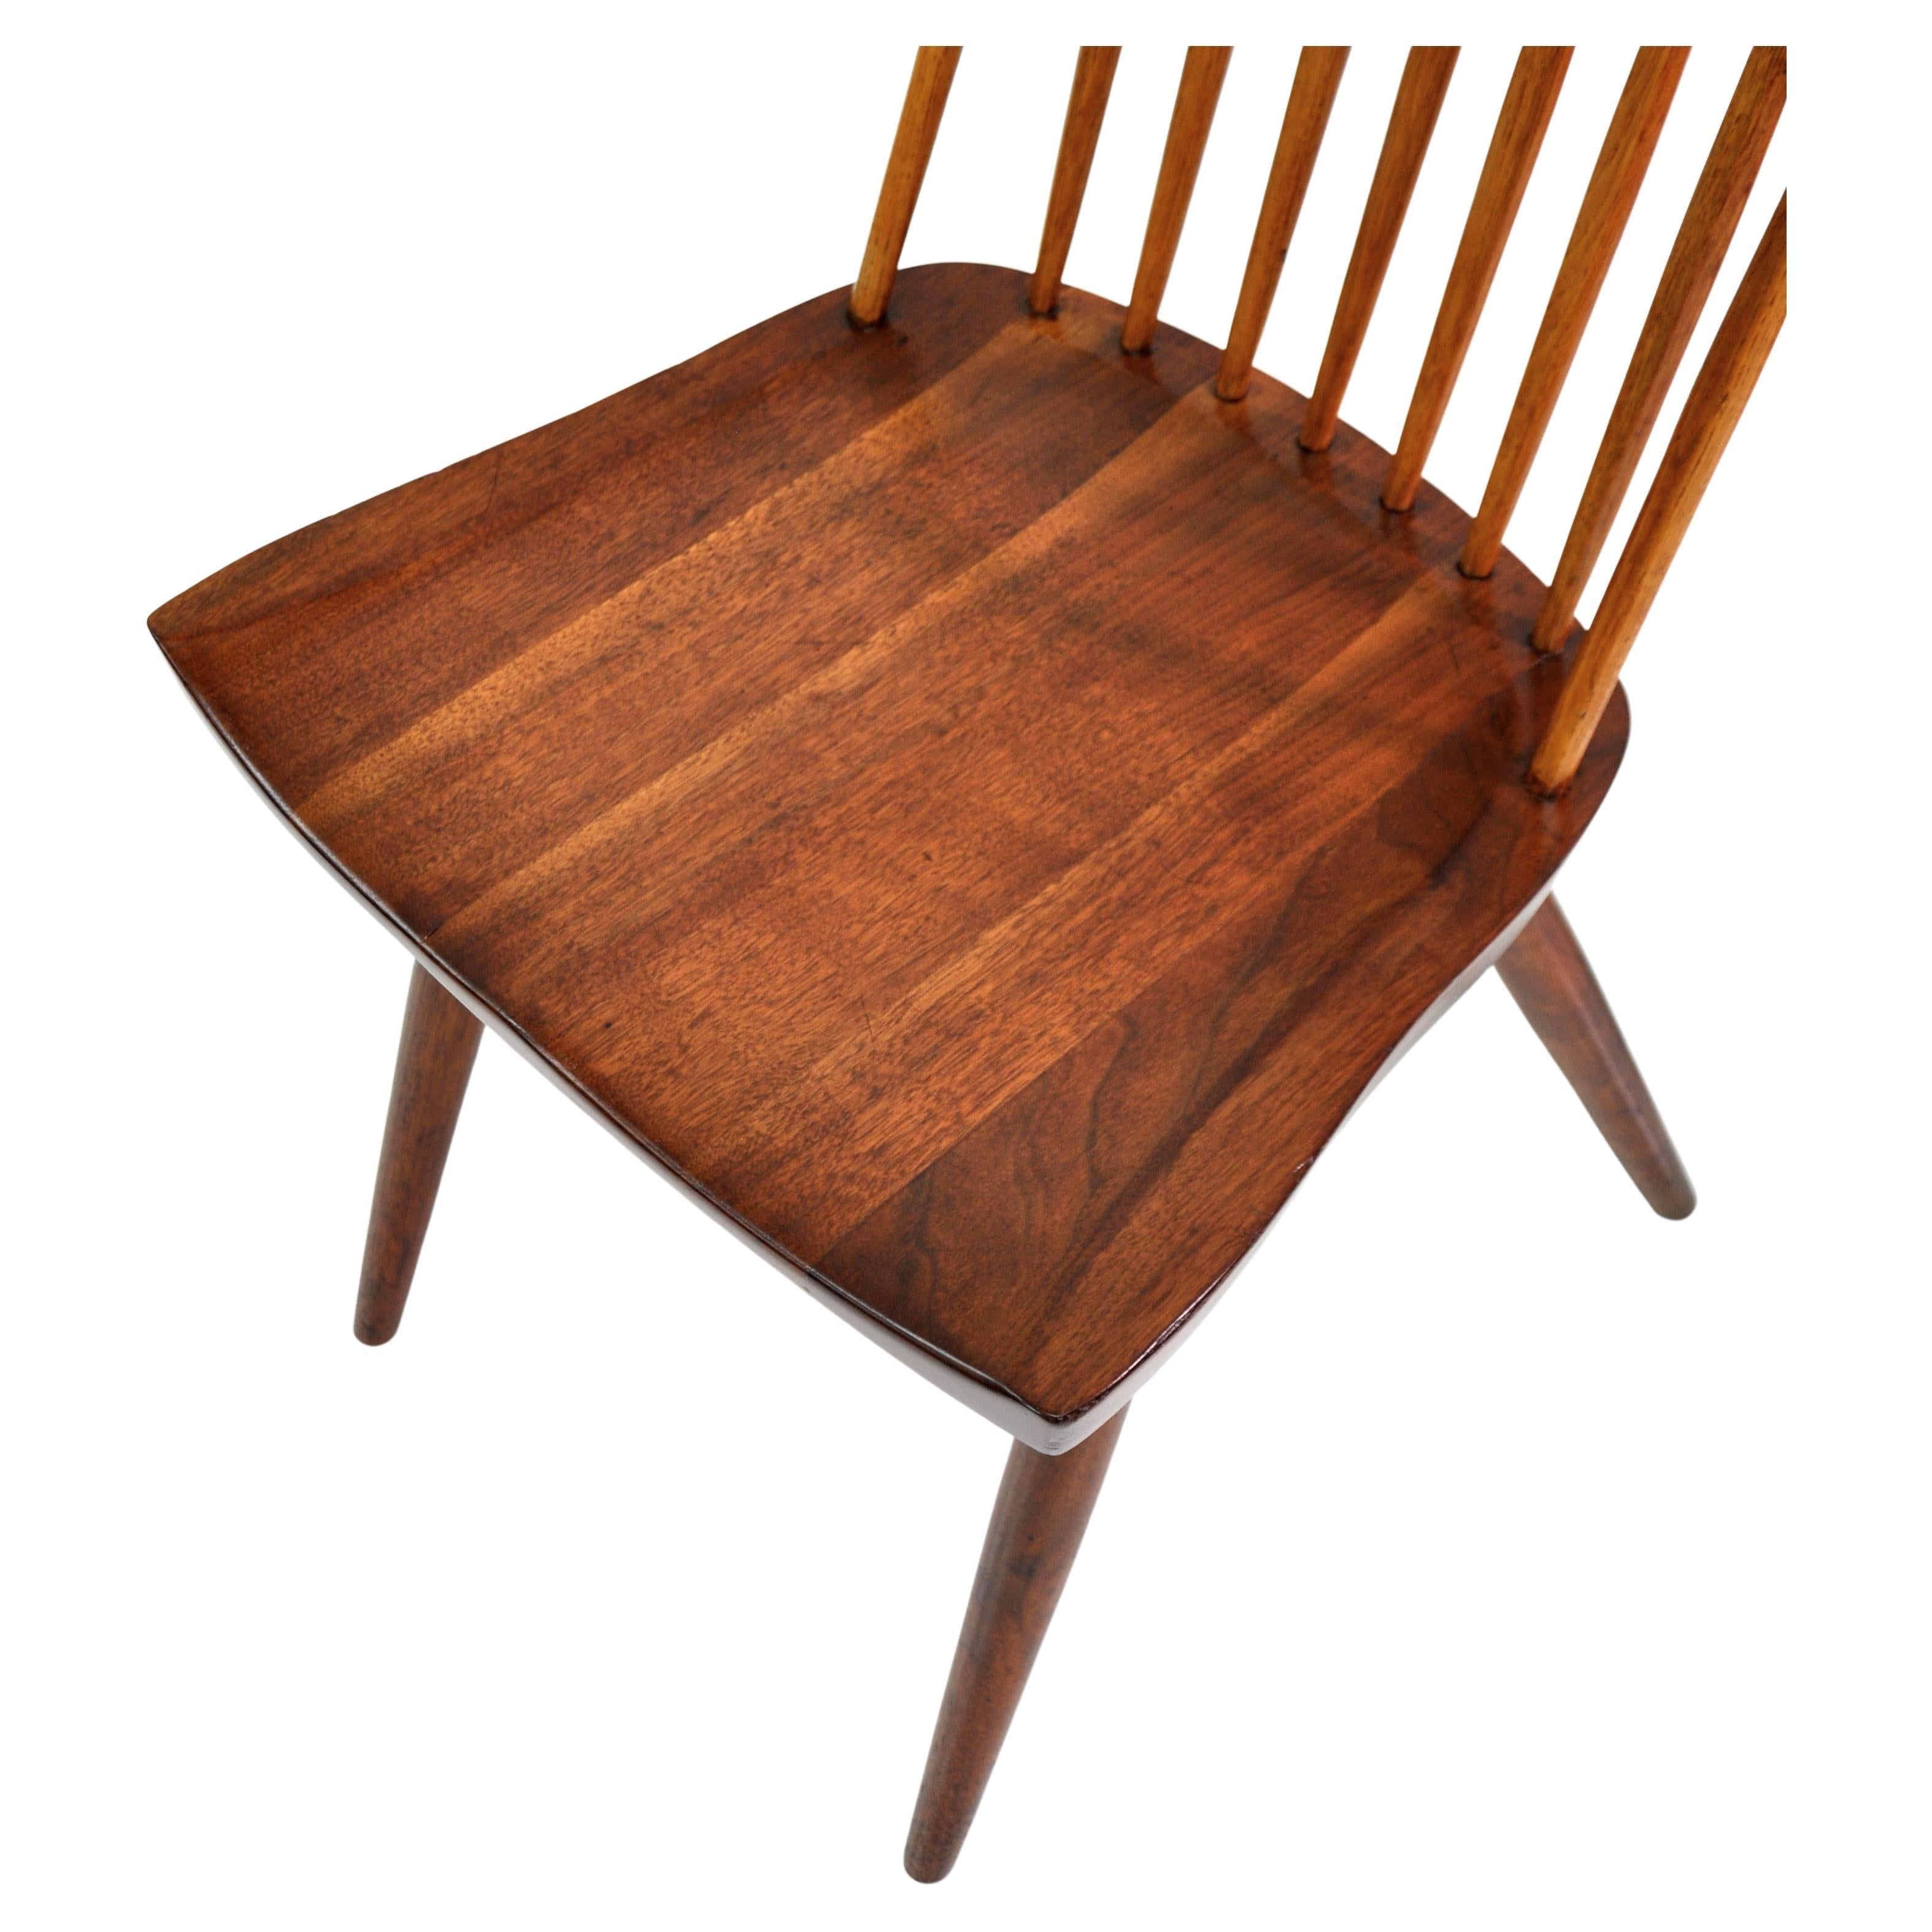 Neuer Stuhl von George Nakashima (American Arts and Crafts)